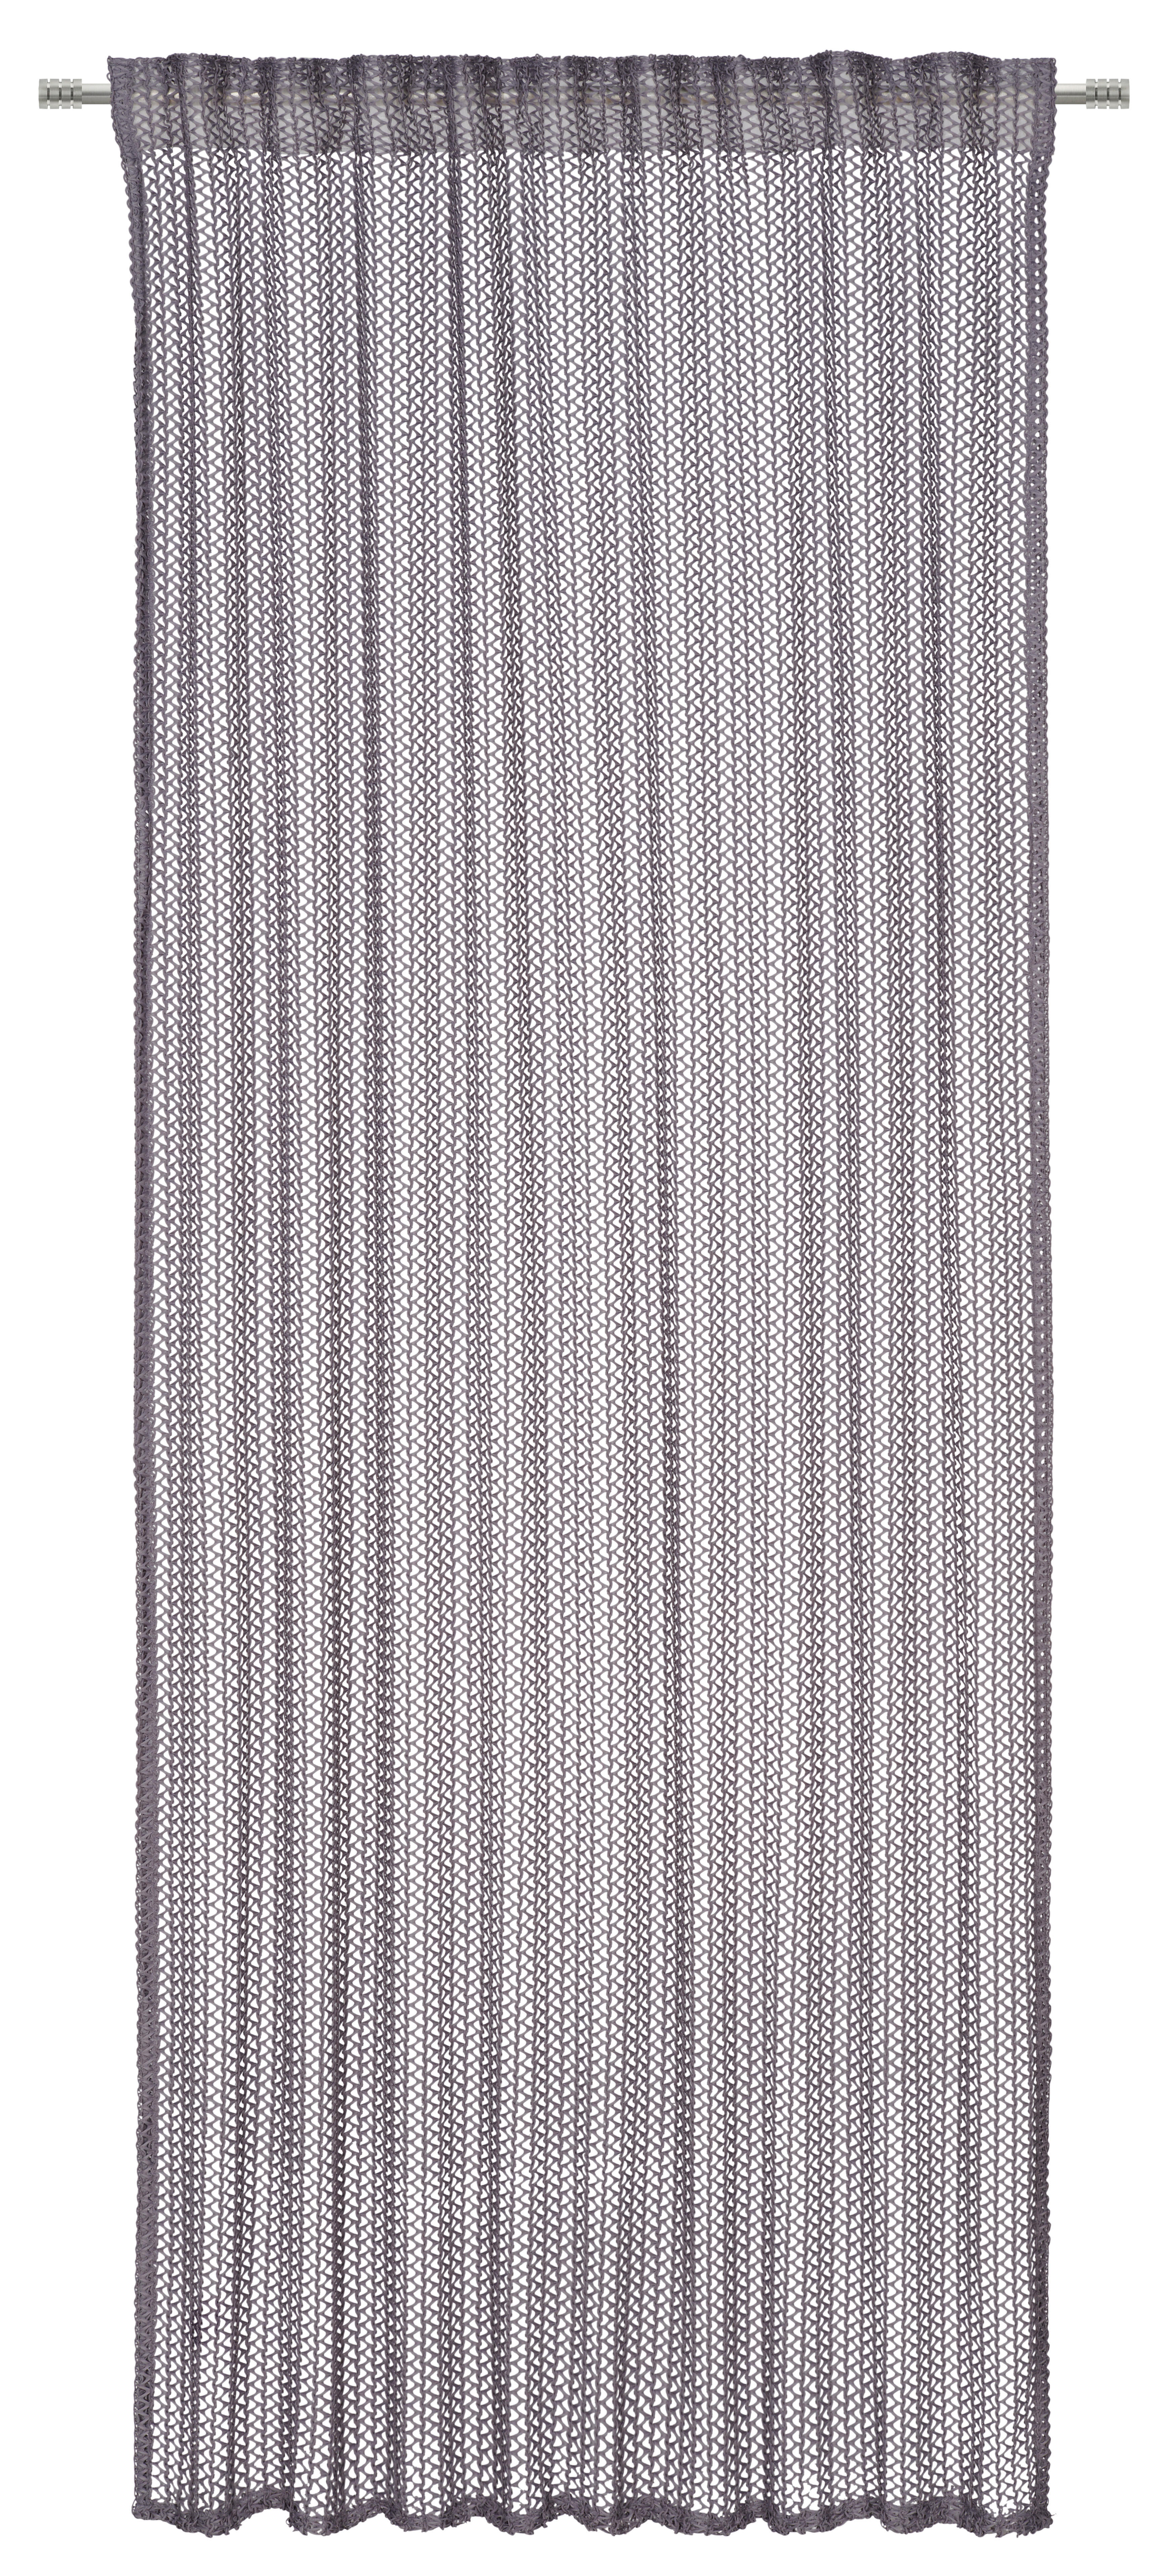 FERTIGVORHANG MIRAJ transparent 140/260 cm   - Anthrazit, Design, Textil (140/260cm) - Dieter Knoll